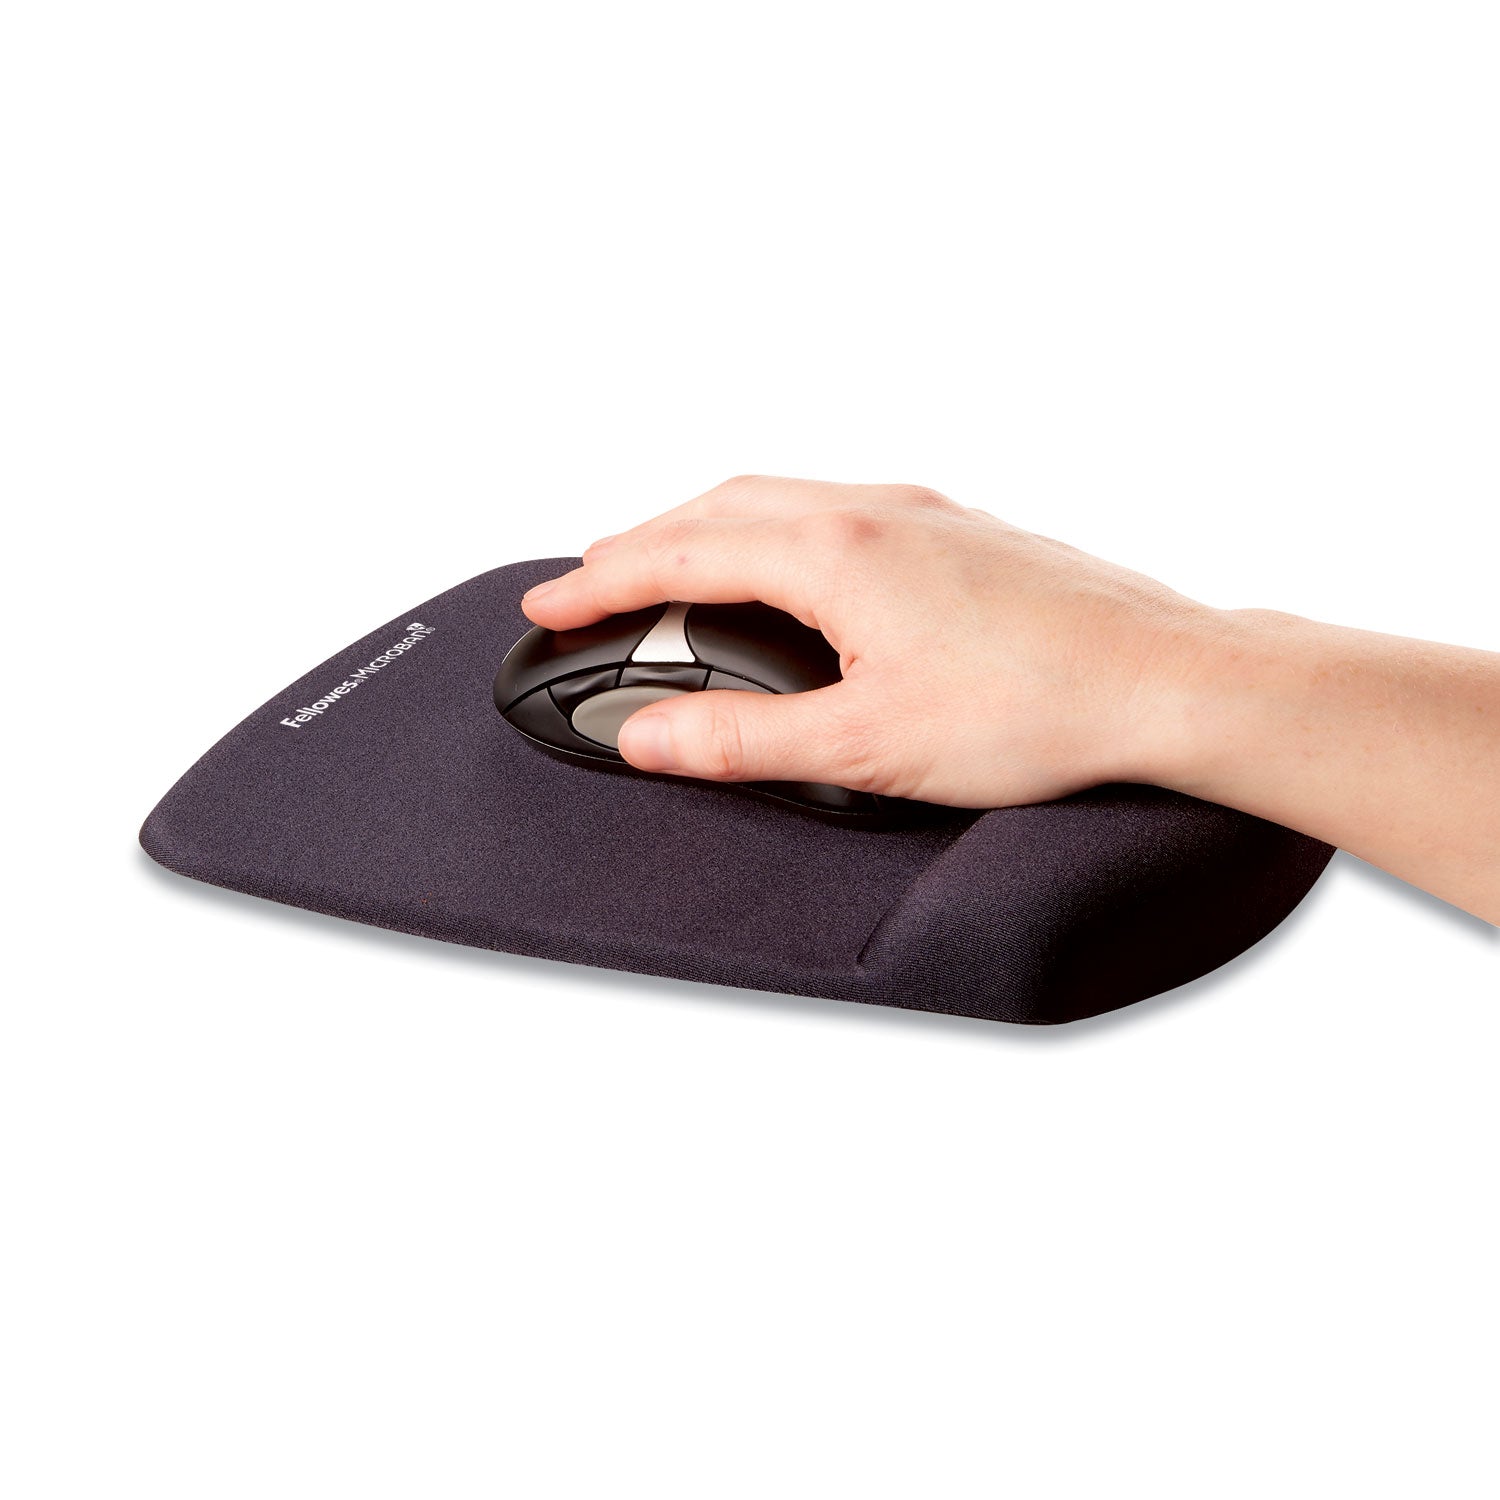 PlushTouch Mouse Pad with Wrist Rest, 7.25 x 9.37, Black - 